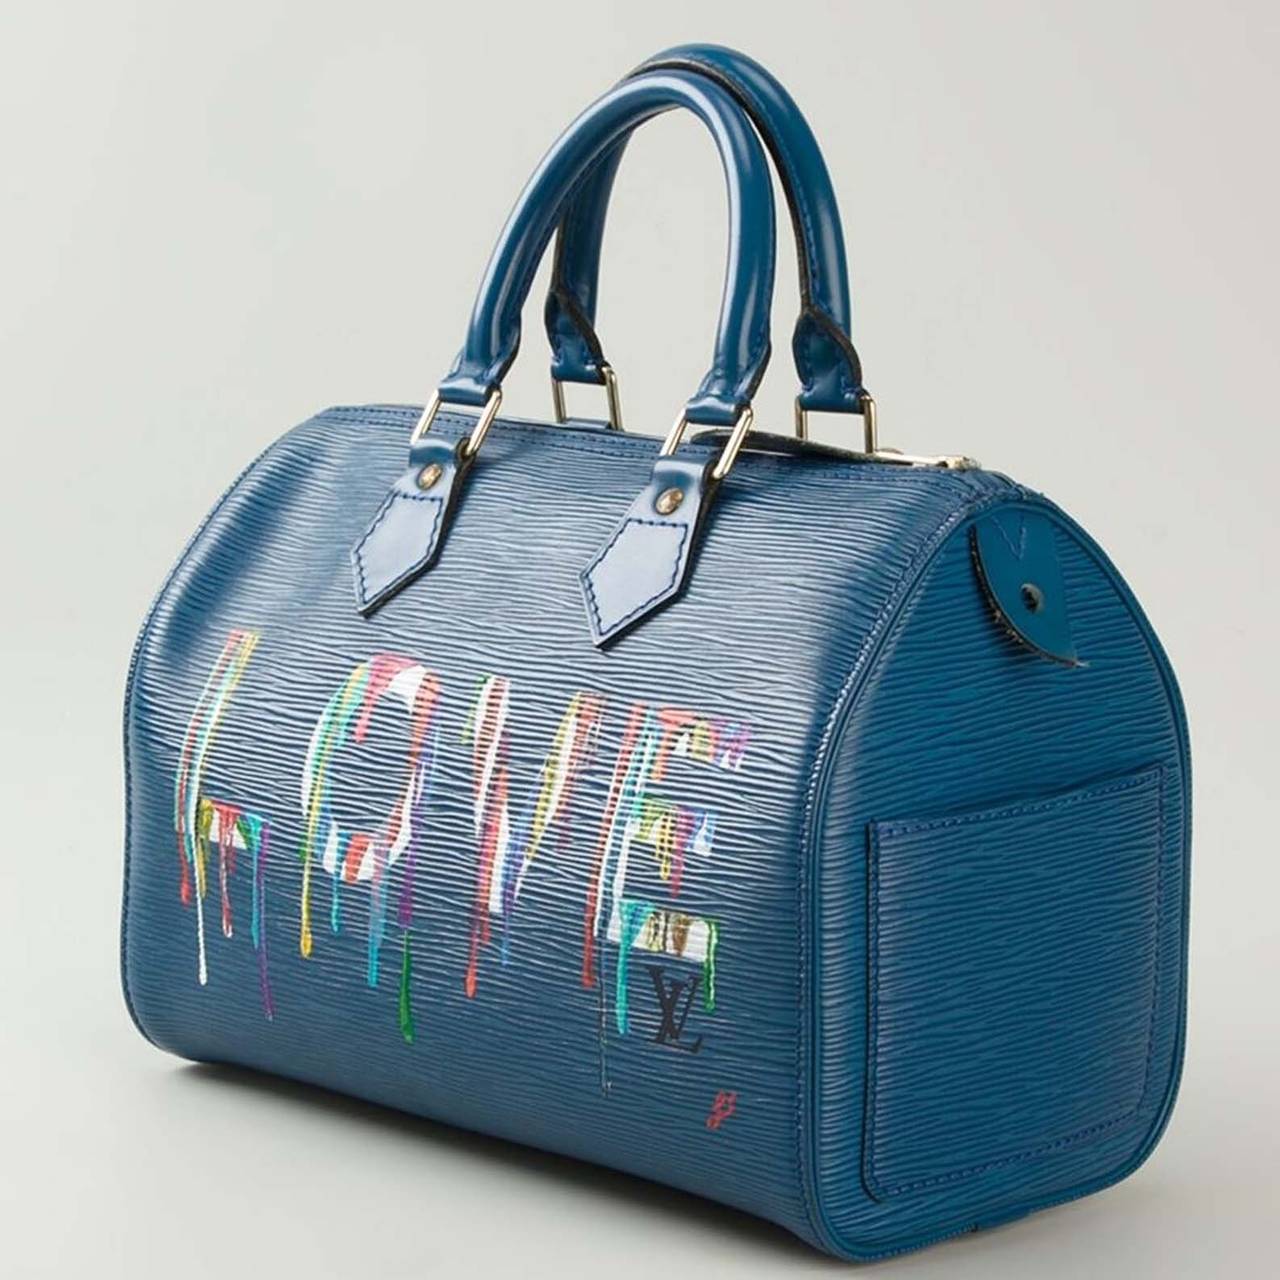 Louis Vuitton Hand Painted Blue Epi Speedy Bag at 1stdibs